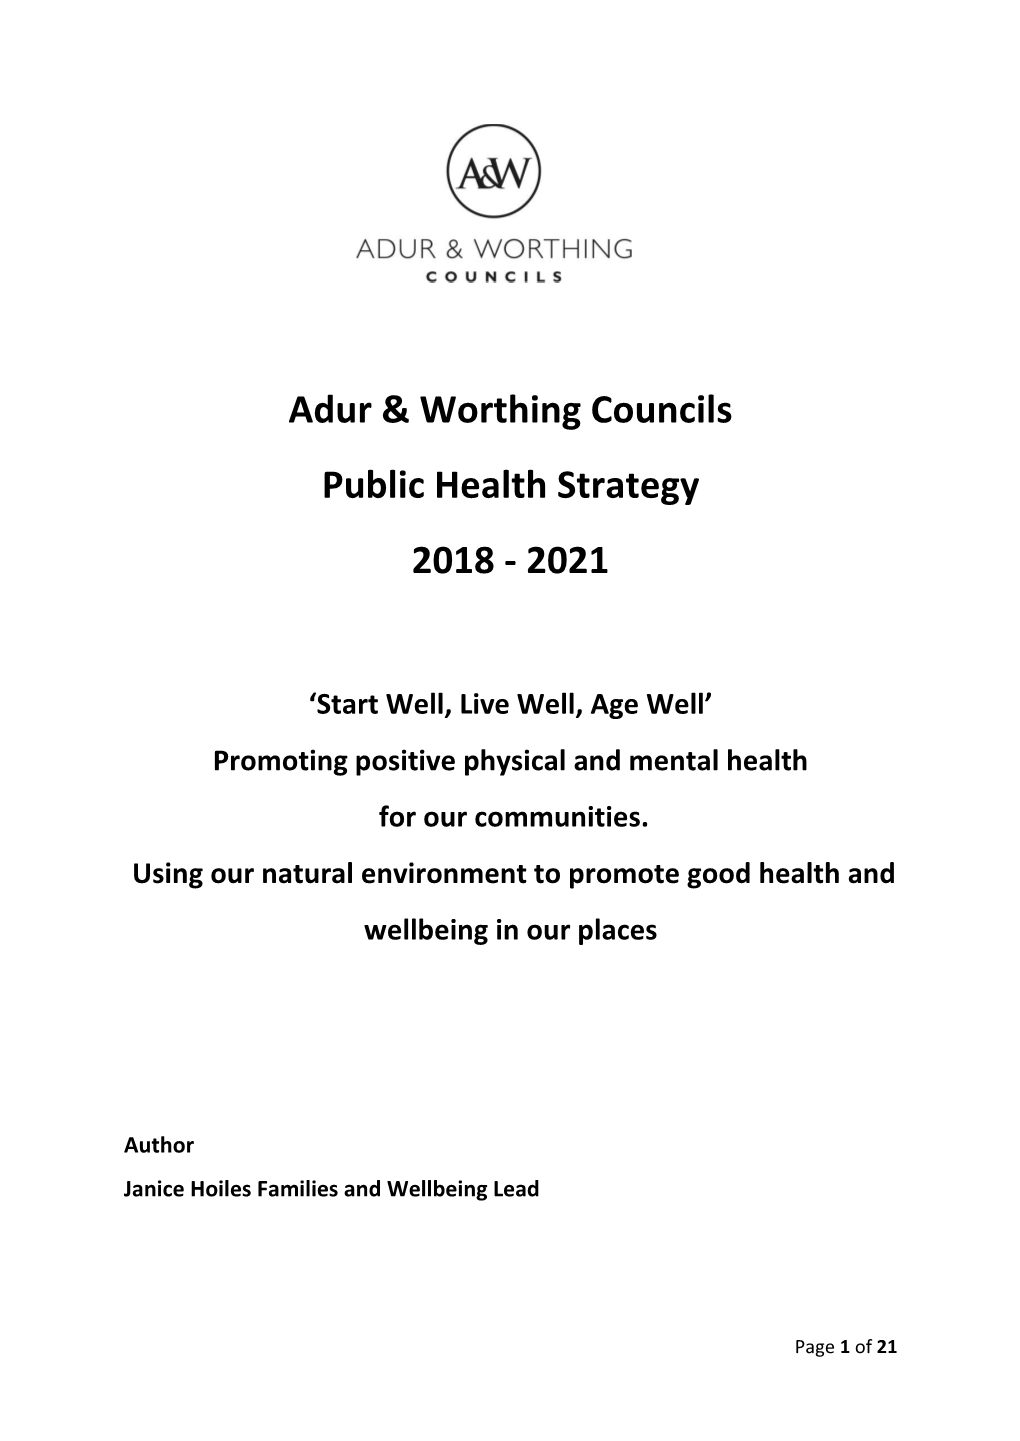 Adur & Worthing Councils Public Health Strategy 2018